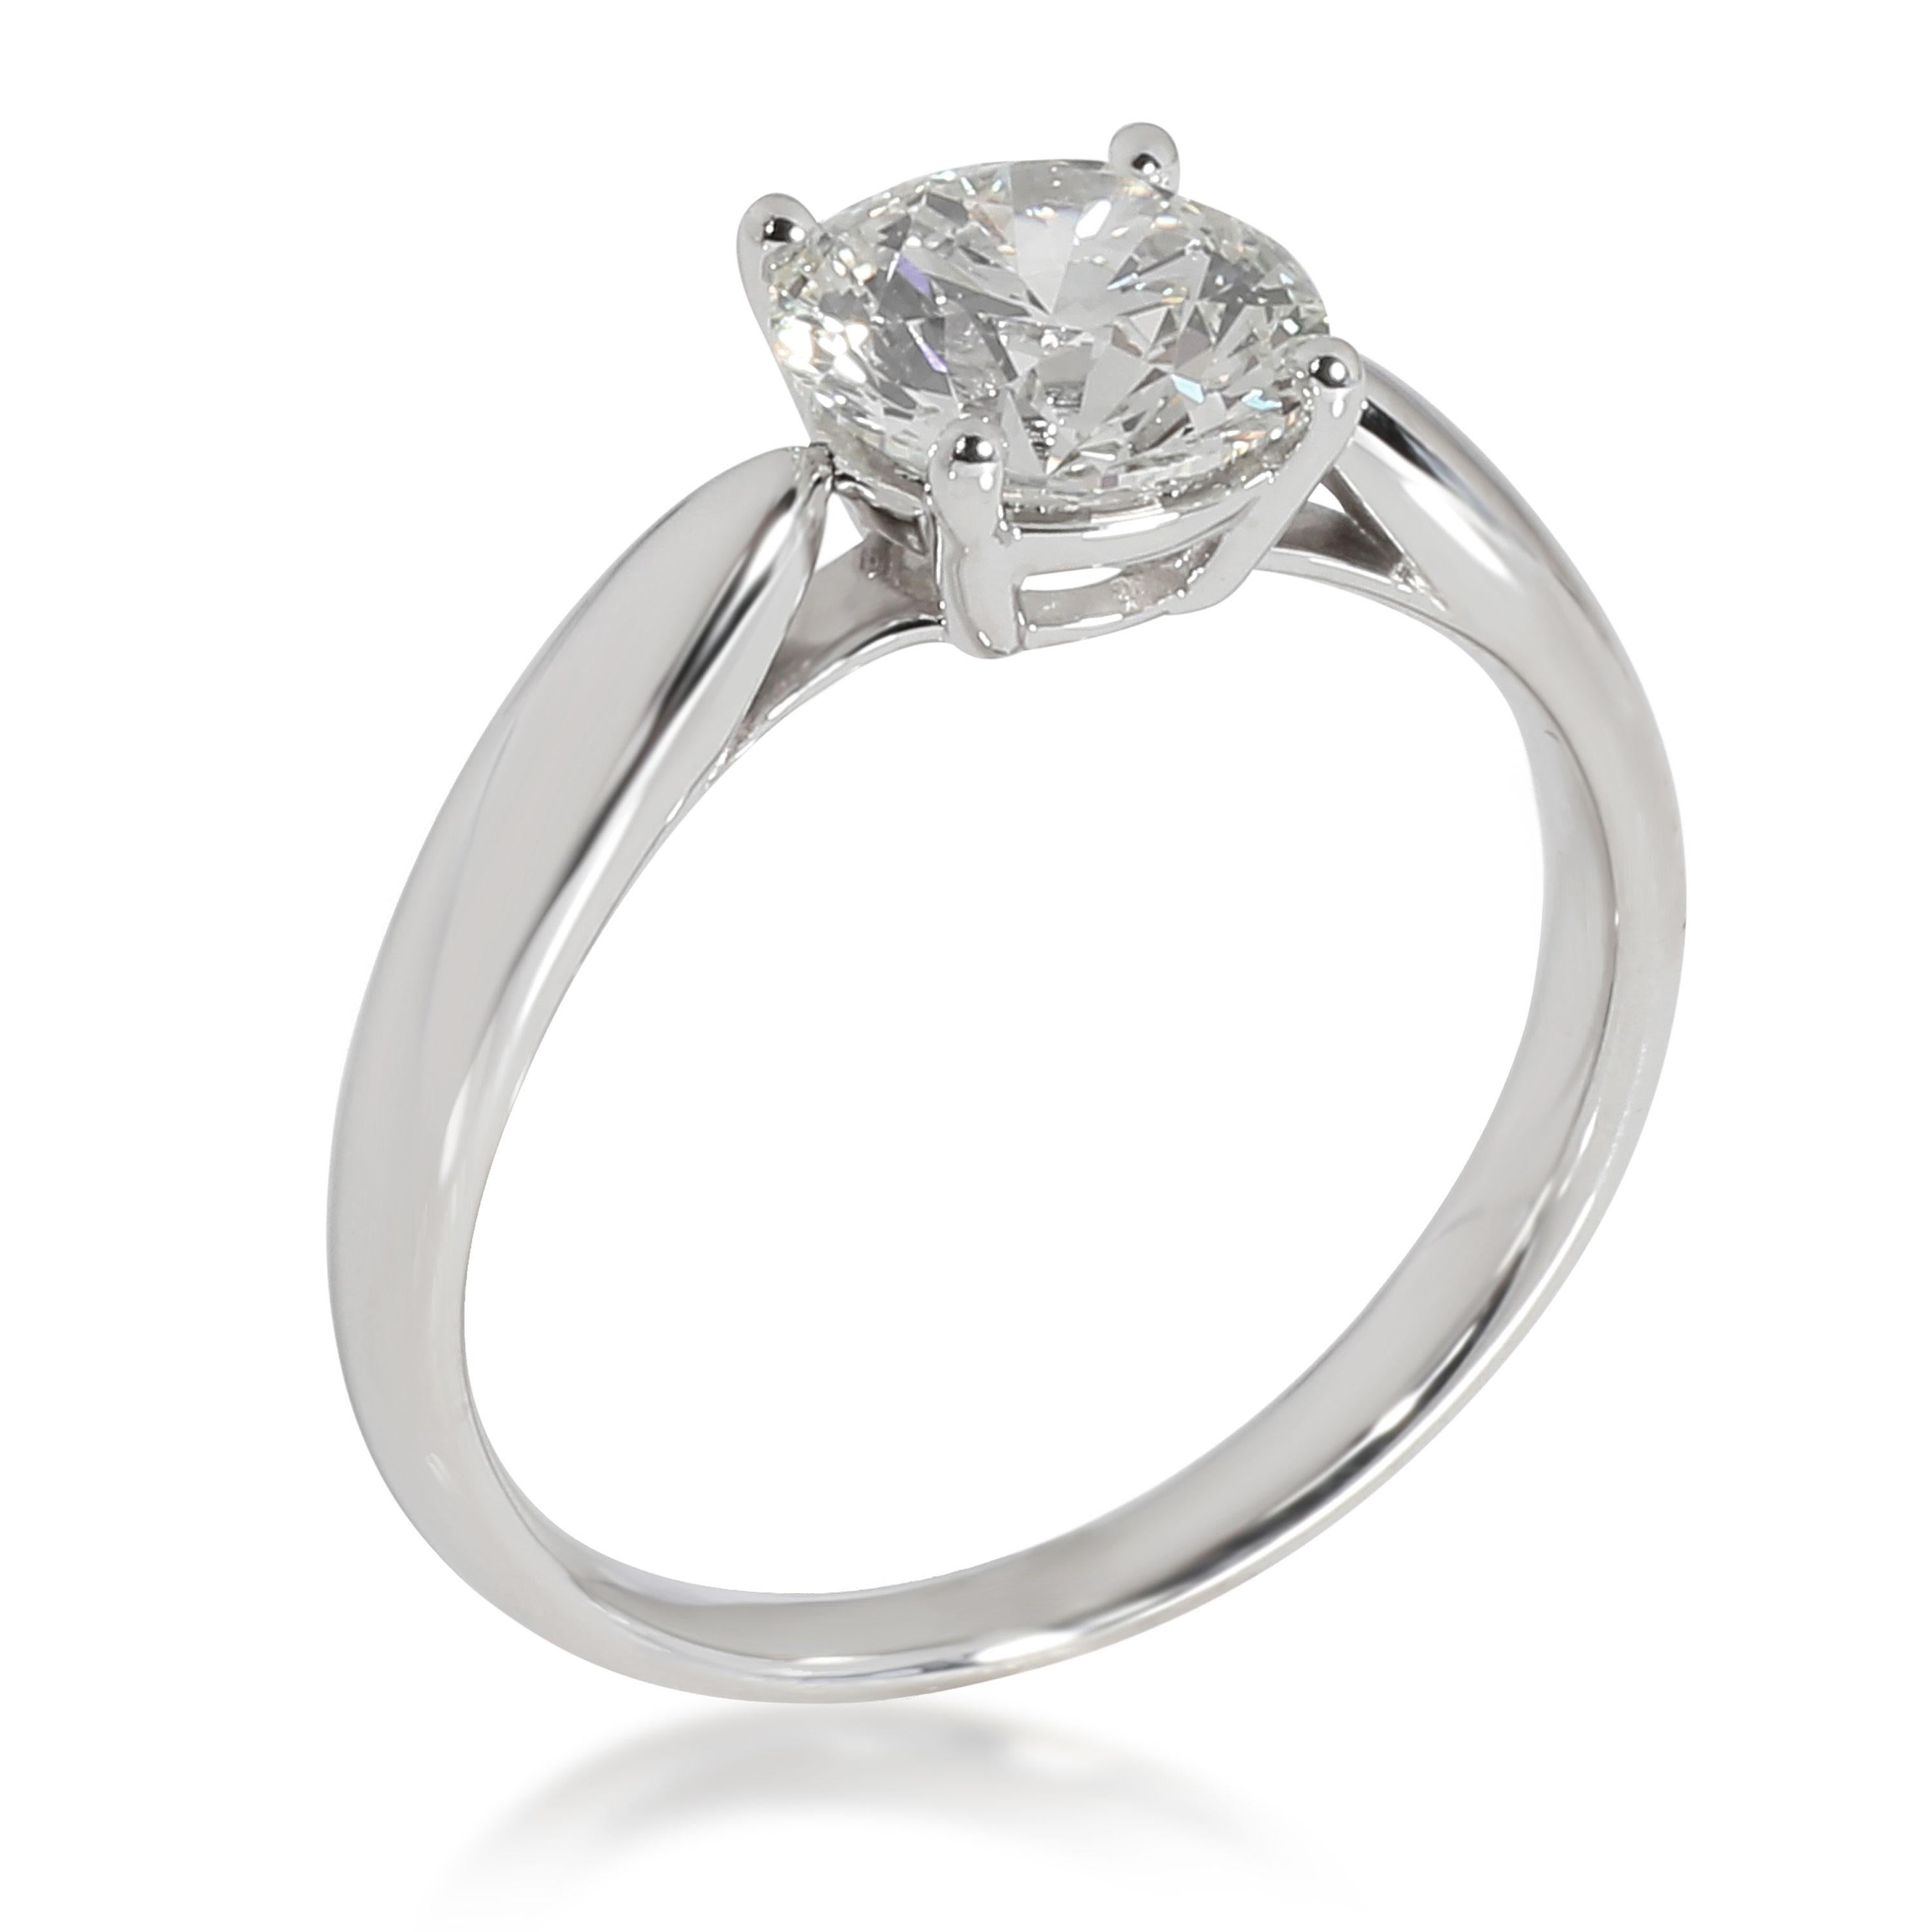 Round Cut Tiffany & Co. Harmony Diamond Engagement Ring in Platinum I VS2 1.22 Carat